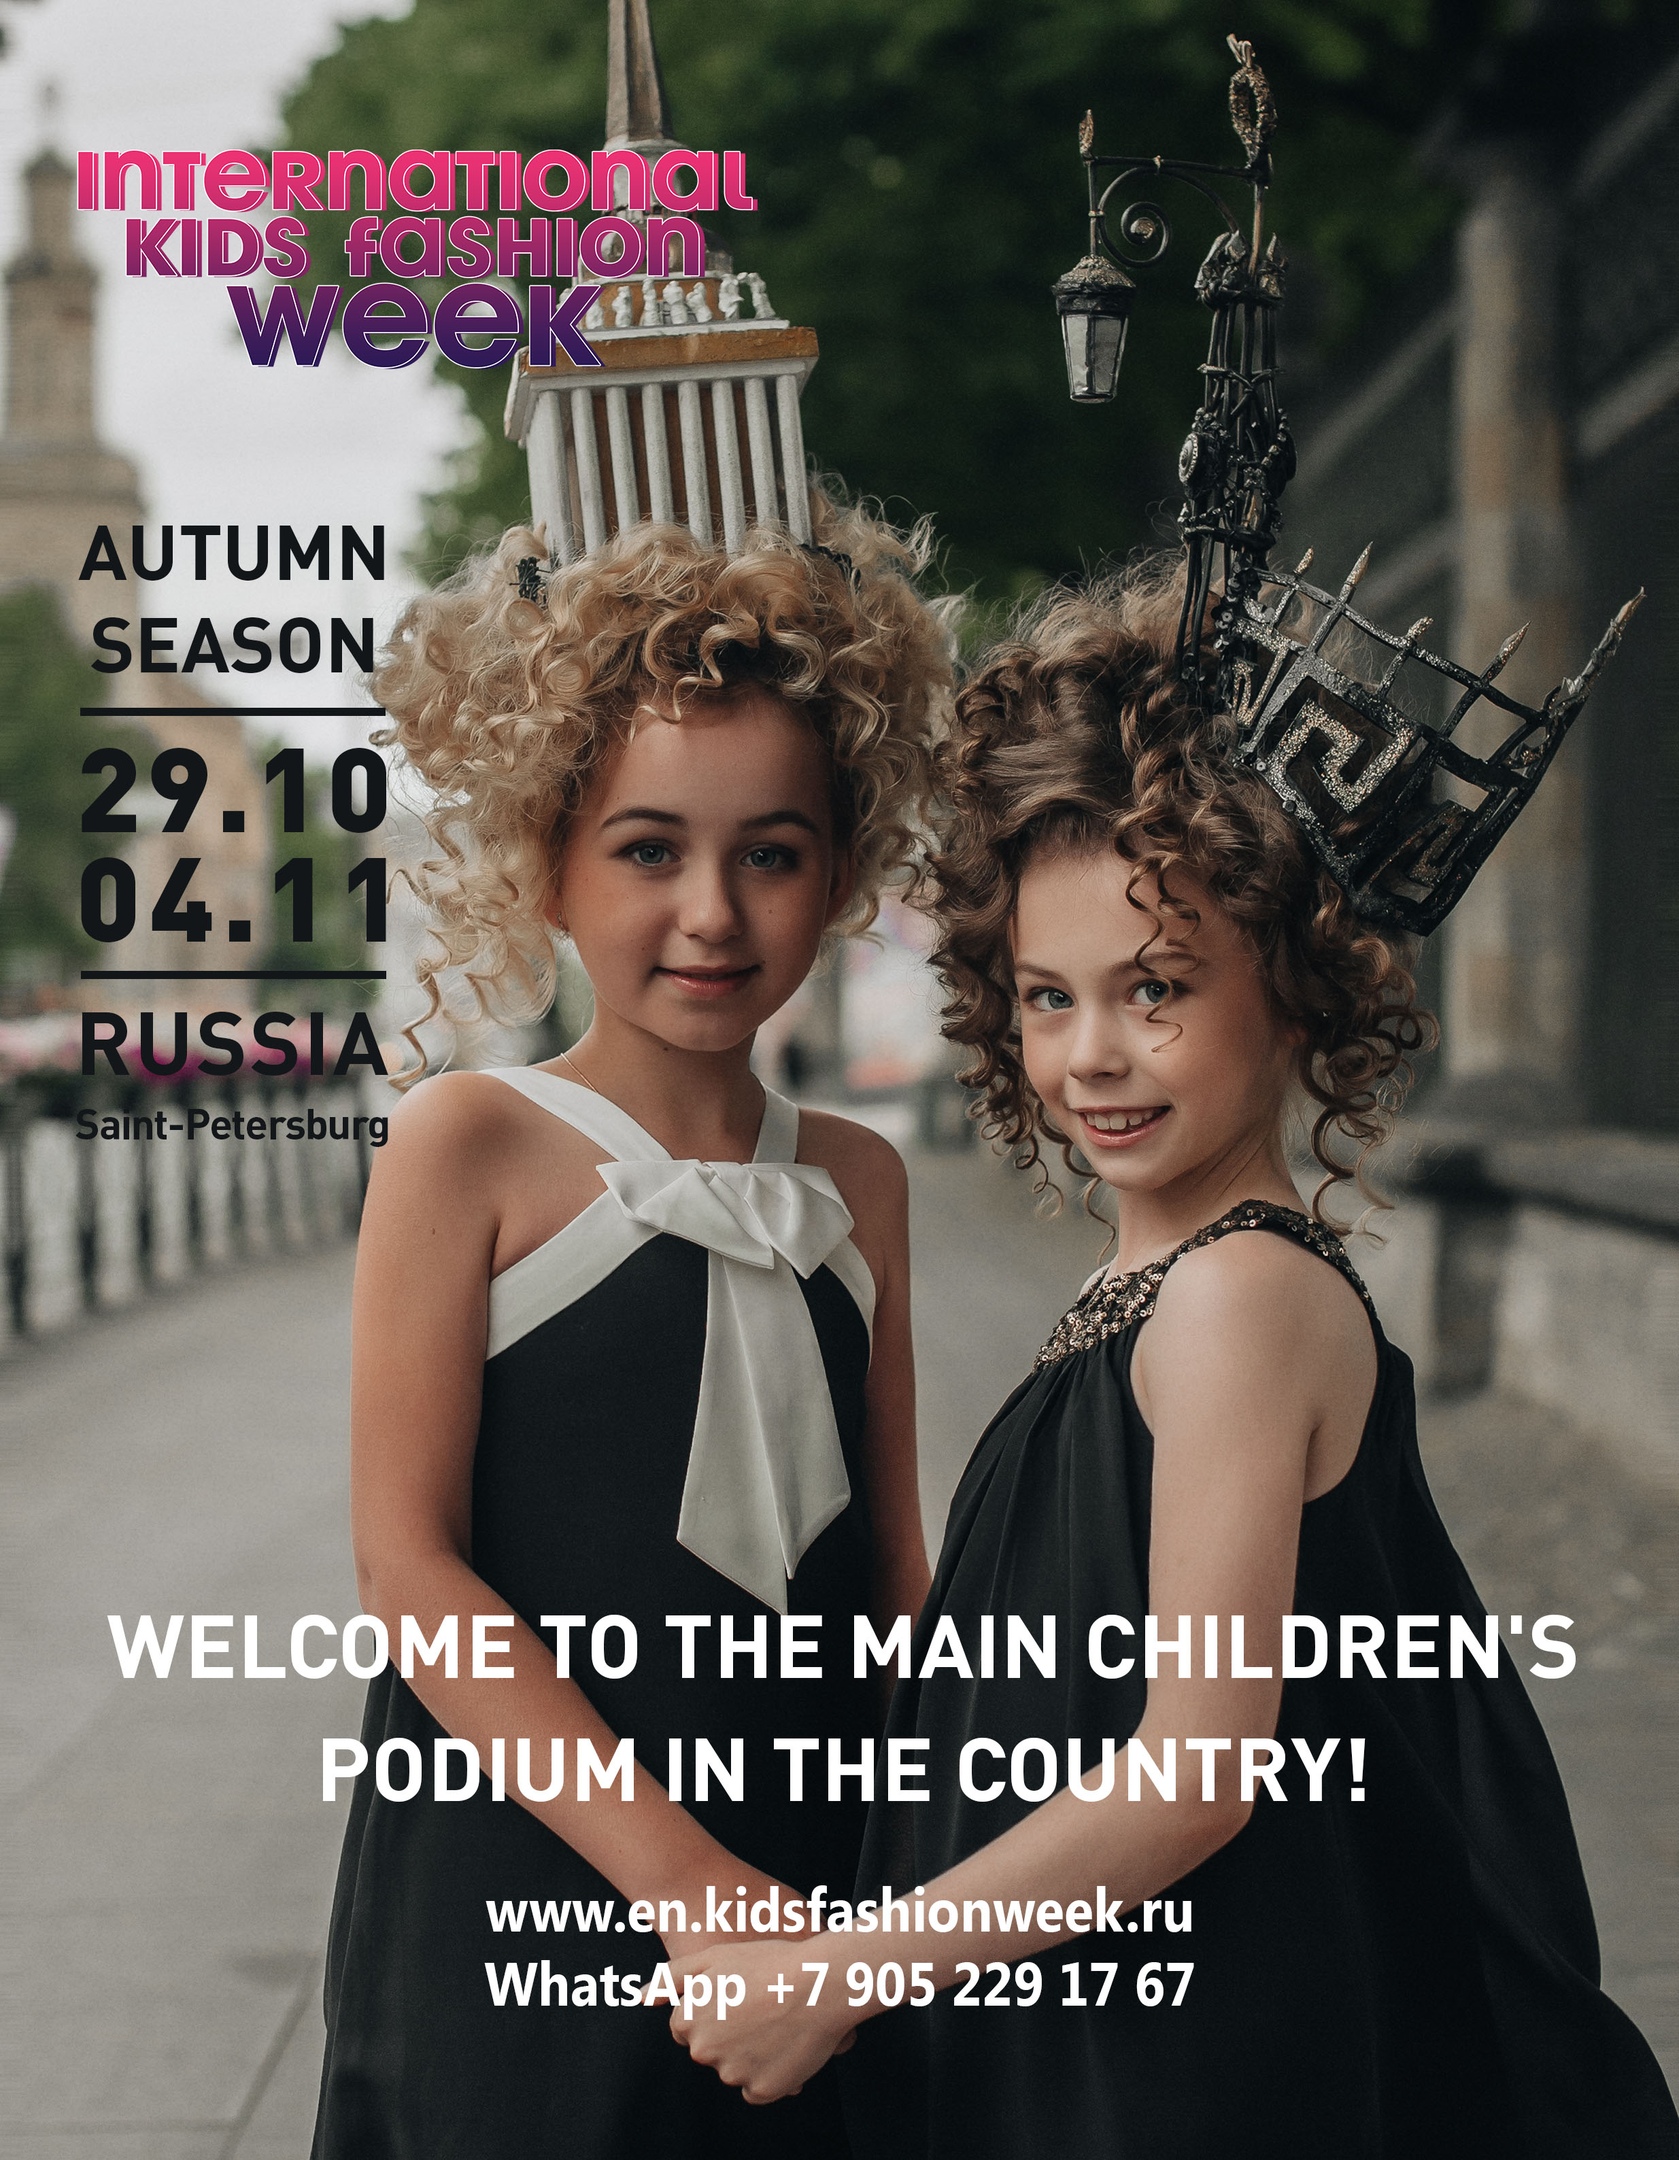 International Kids Fashion Week in Russia St. Petersburg